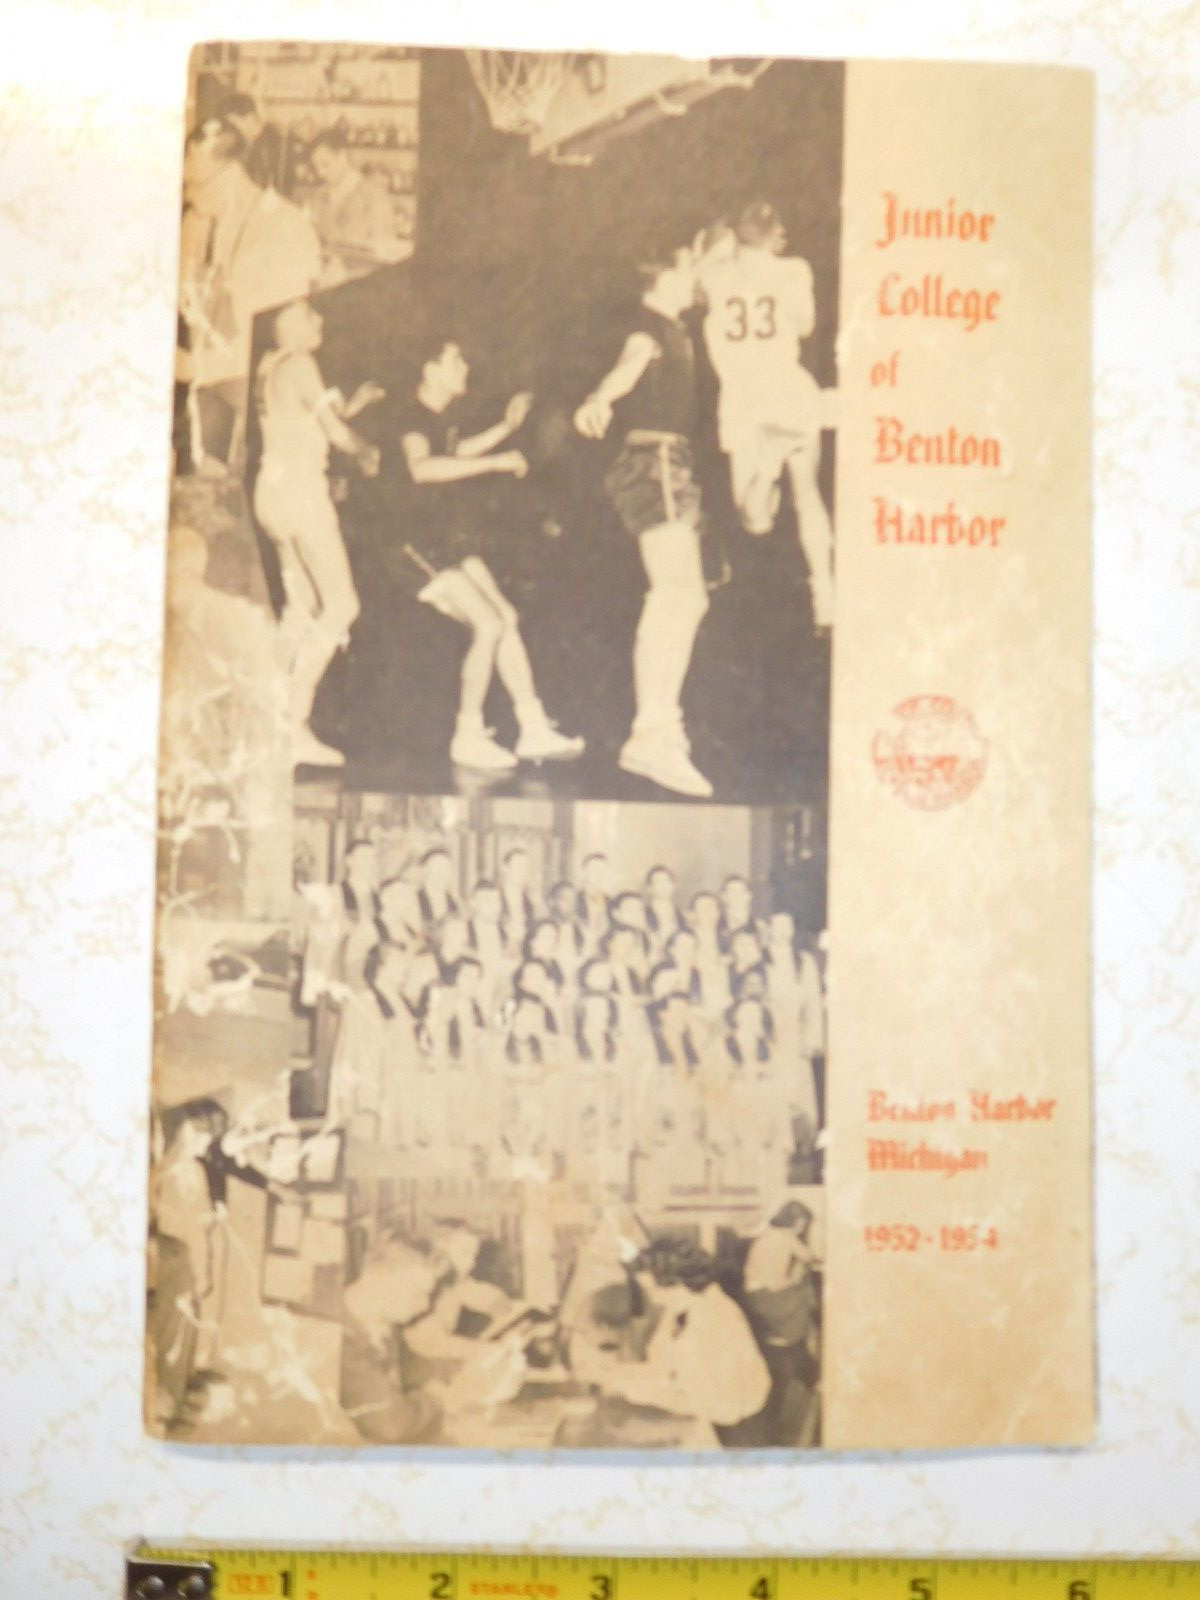 Rare Vintage 1952-54 Junior College of Benton Harbor, MI Course Catalog